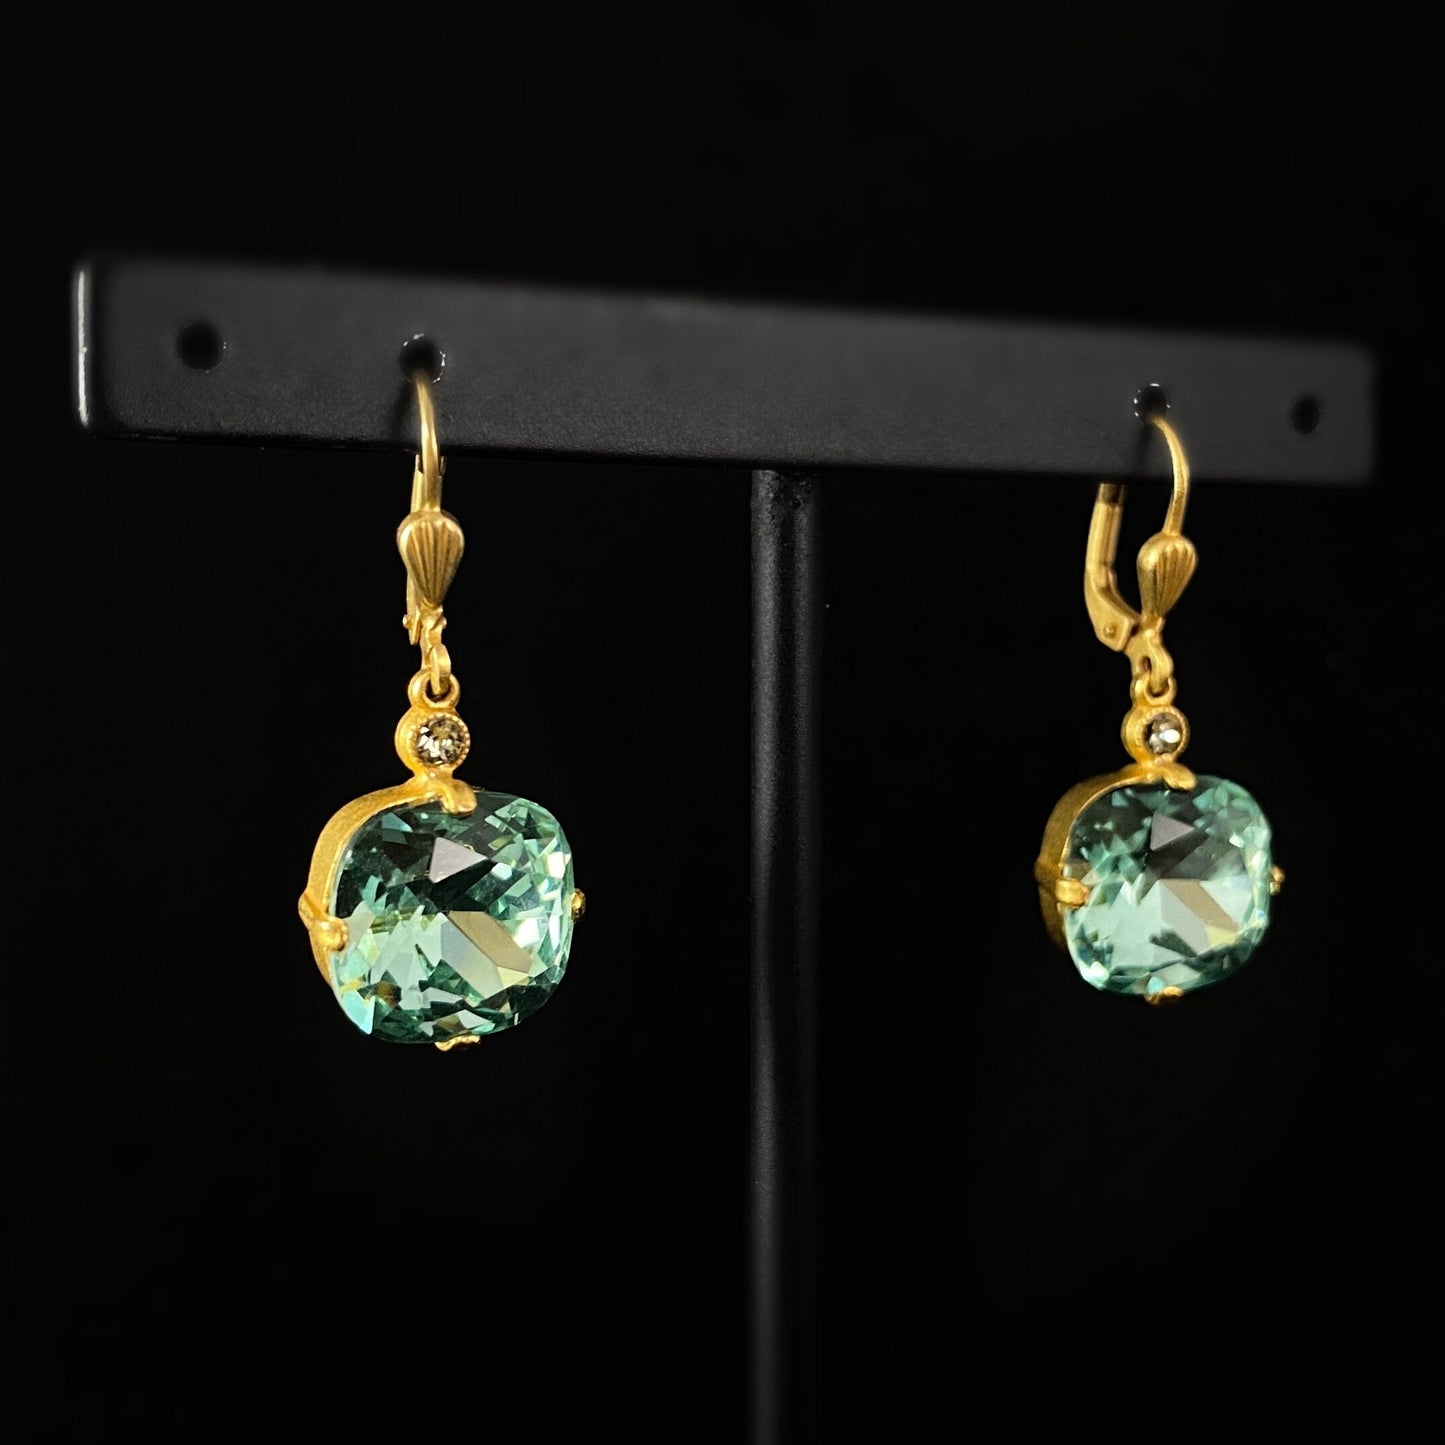 Cushion Cut Swarovski Crystal Drop Earrings, Mint Green - La Vie Parisienne by Catherine Popesco